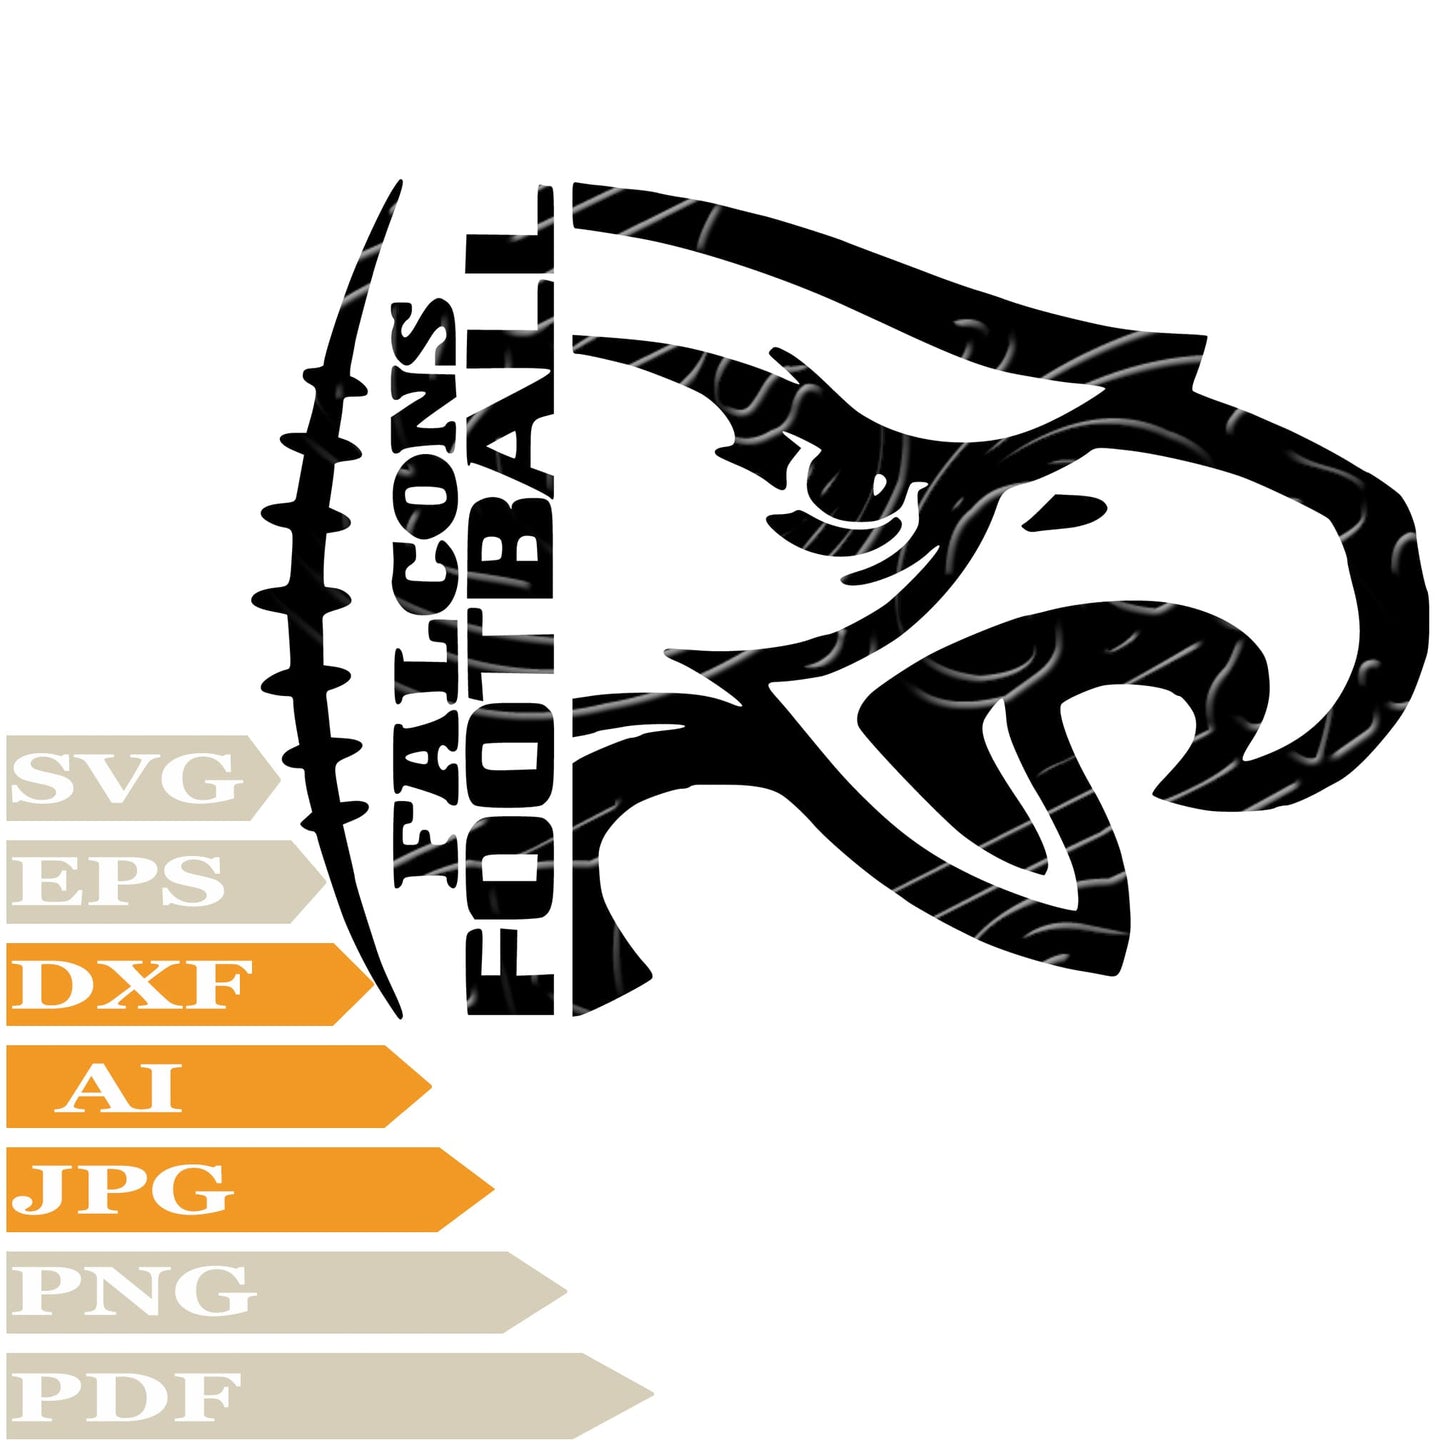 Atlanta Falcons, Falcons Football Logo Svg File, Image Cut, Png, For Tattoo, Silhouette, Digital Vector Download, Cut File, Clipart, For Cricut